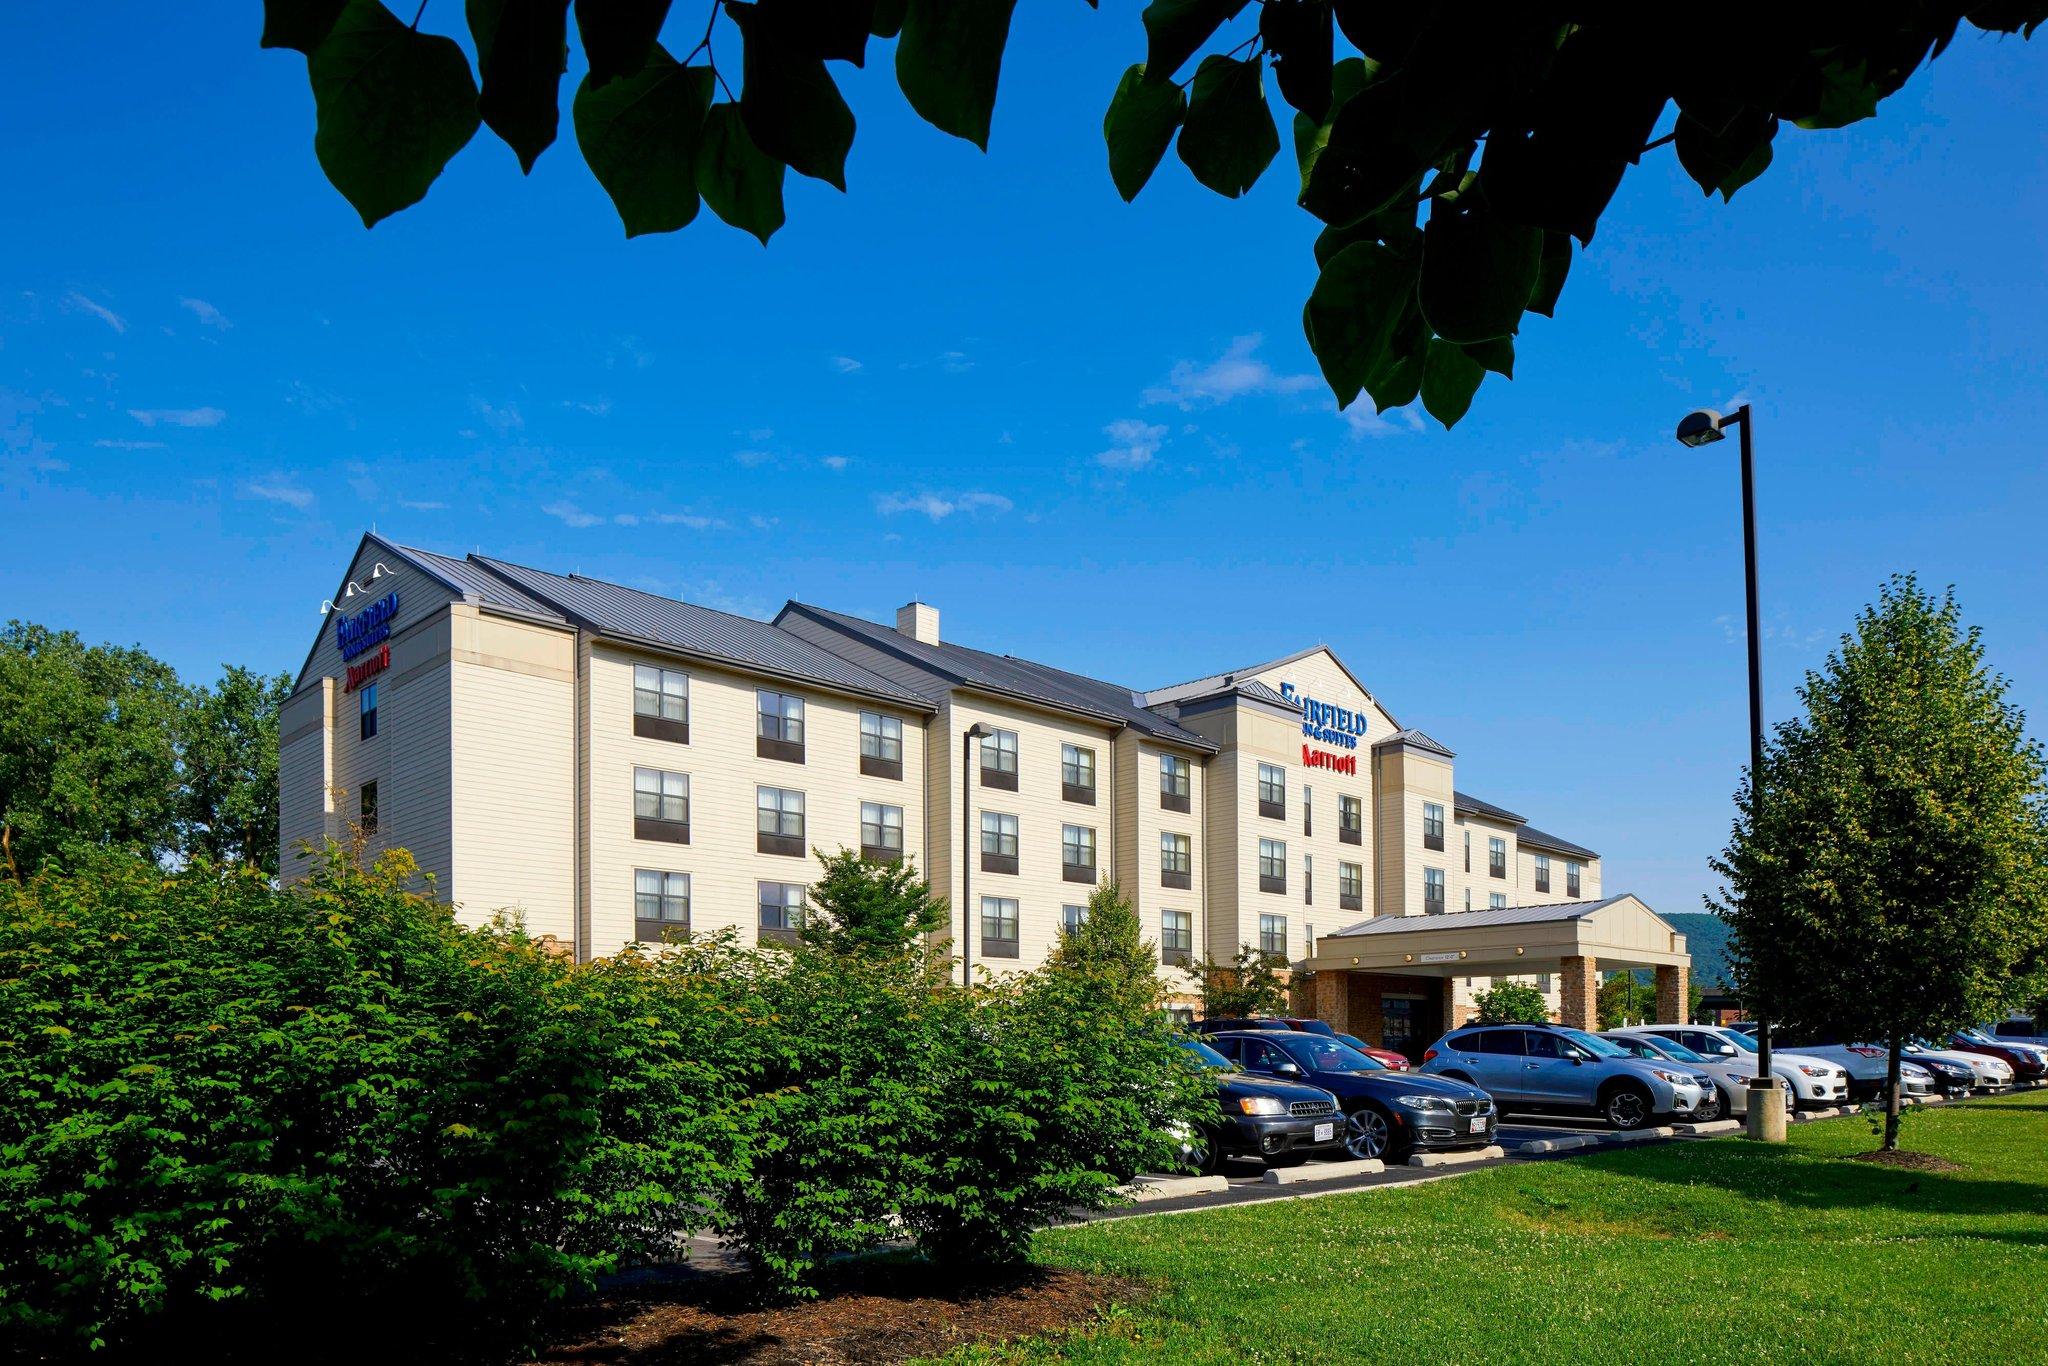 Fairfield Inn & Suites Cumberland in Cumberland, MD